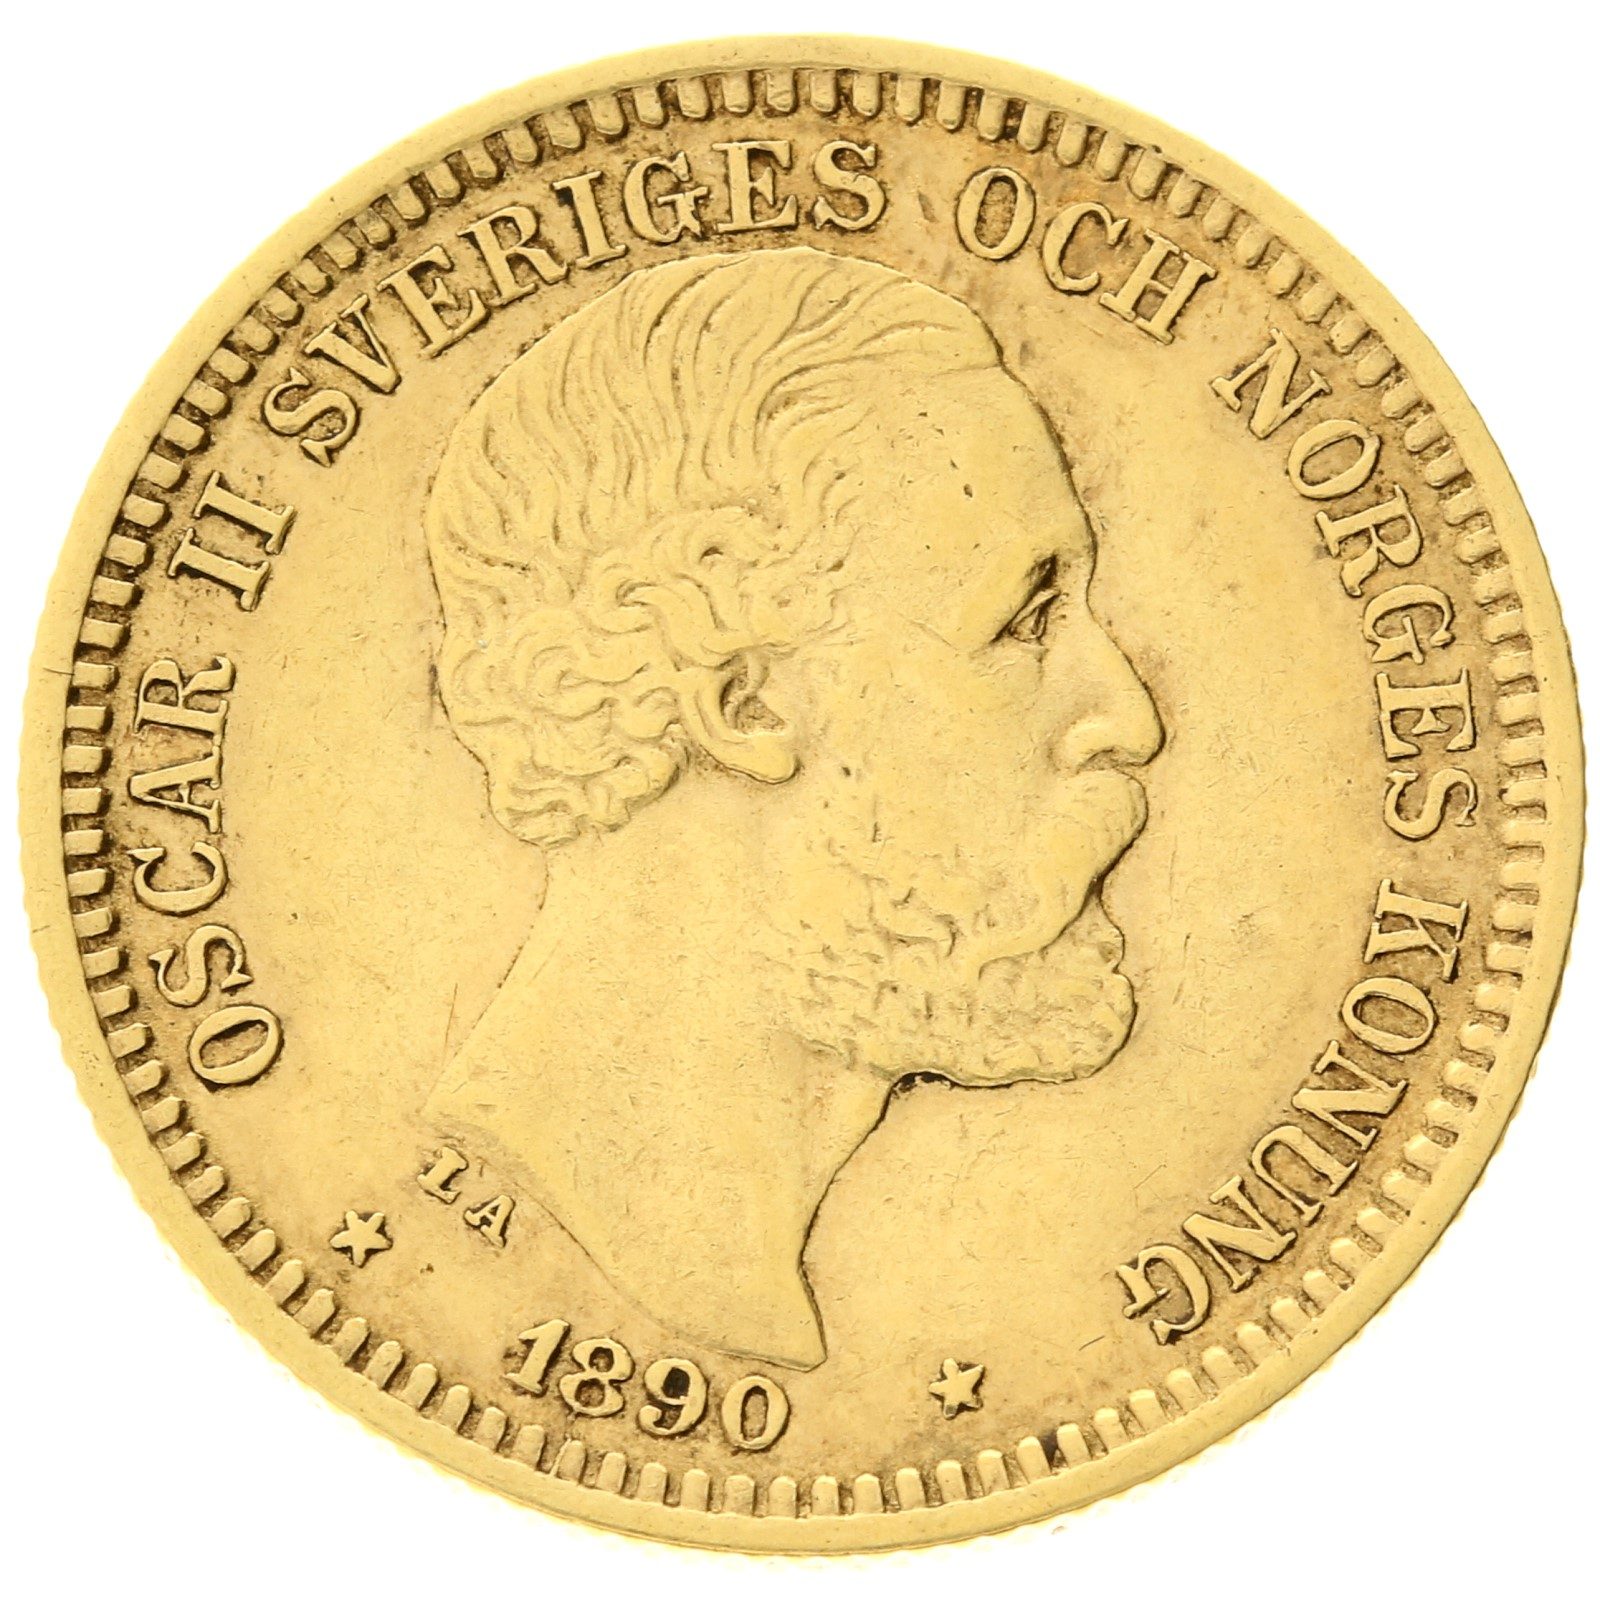 Sweden - 20 kronor - 1890 - Oscar II